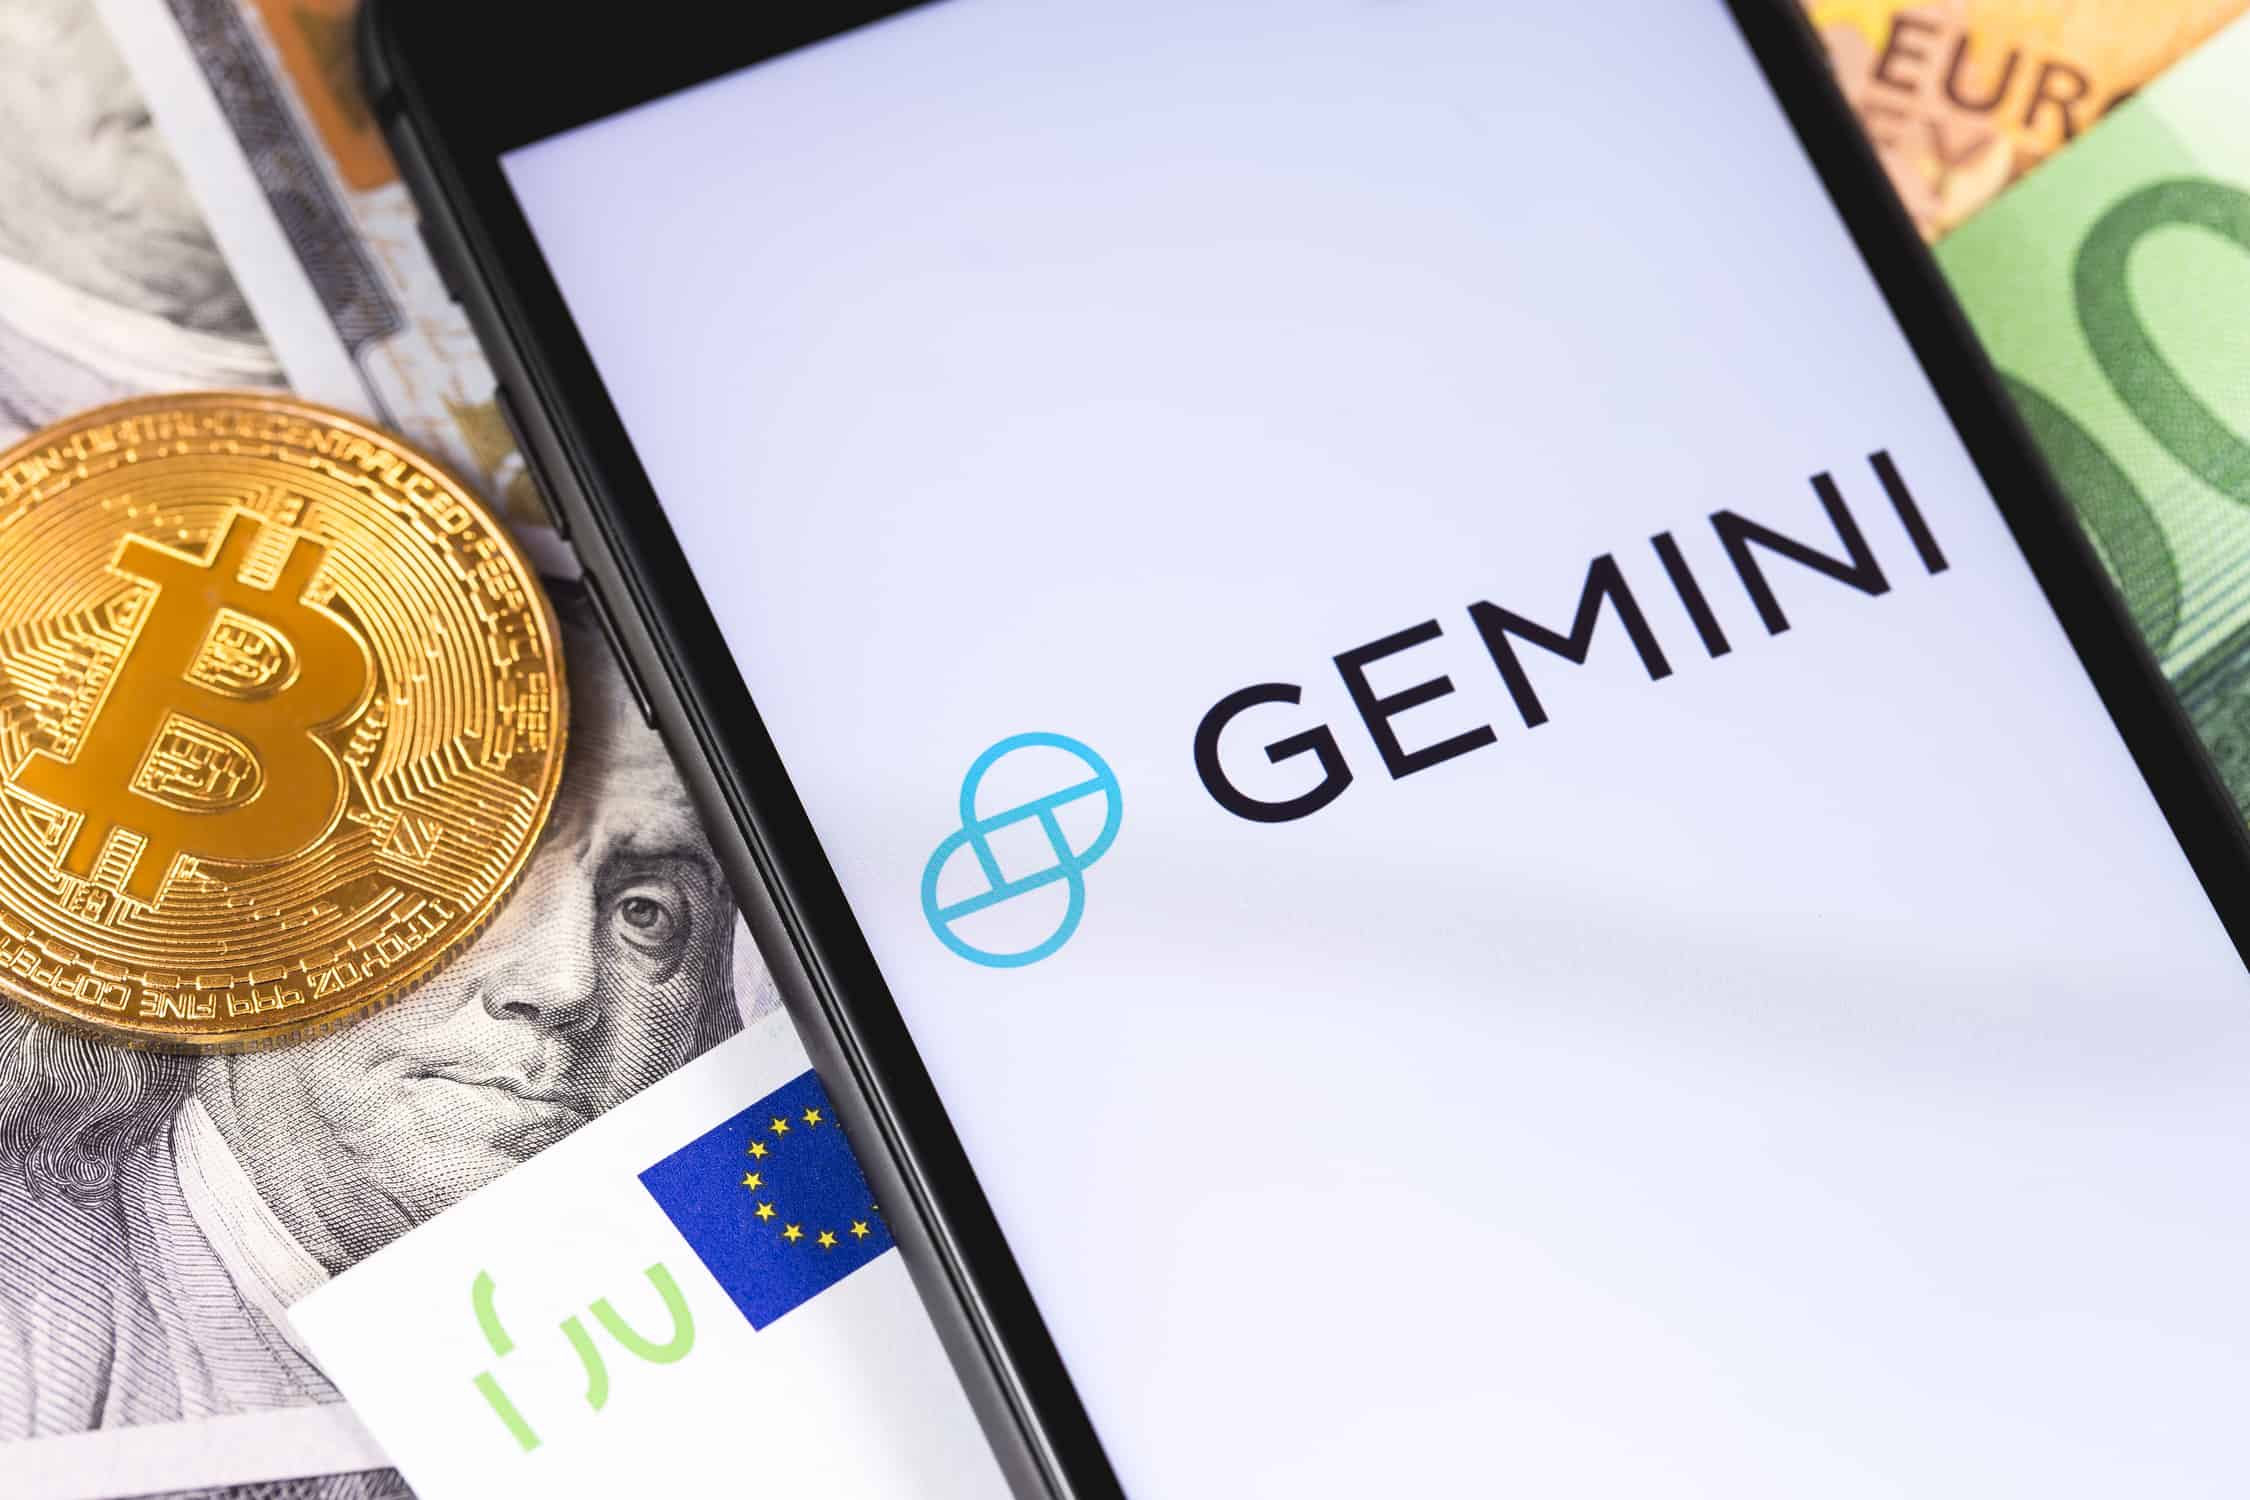 gemini trading platform